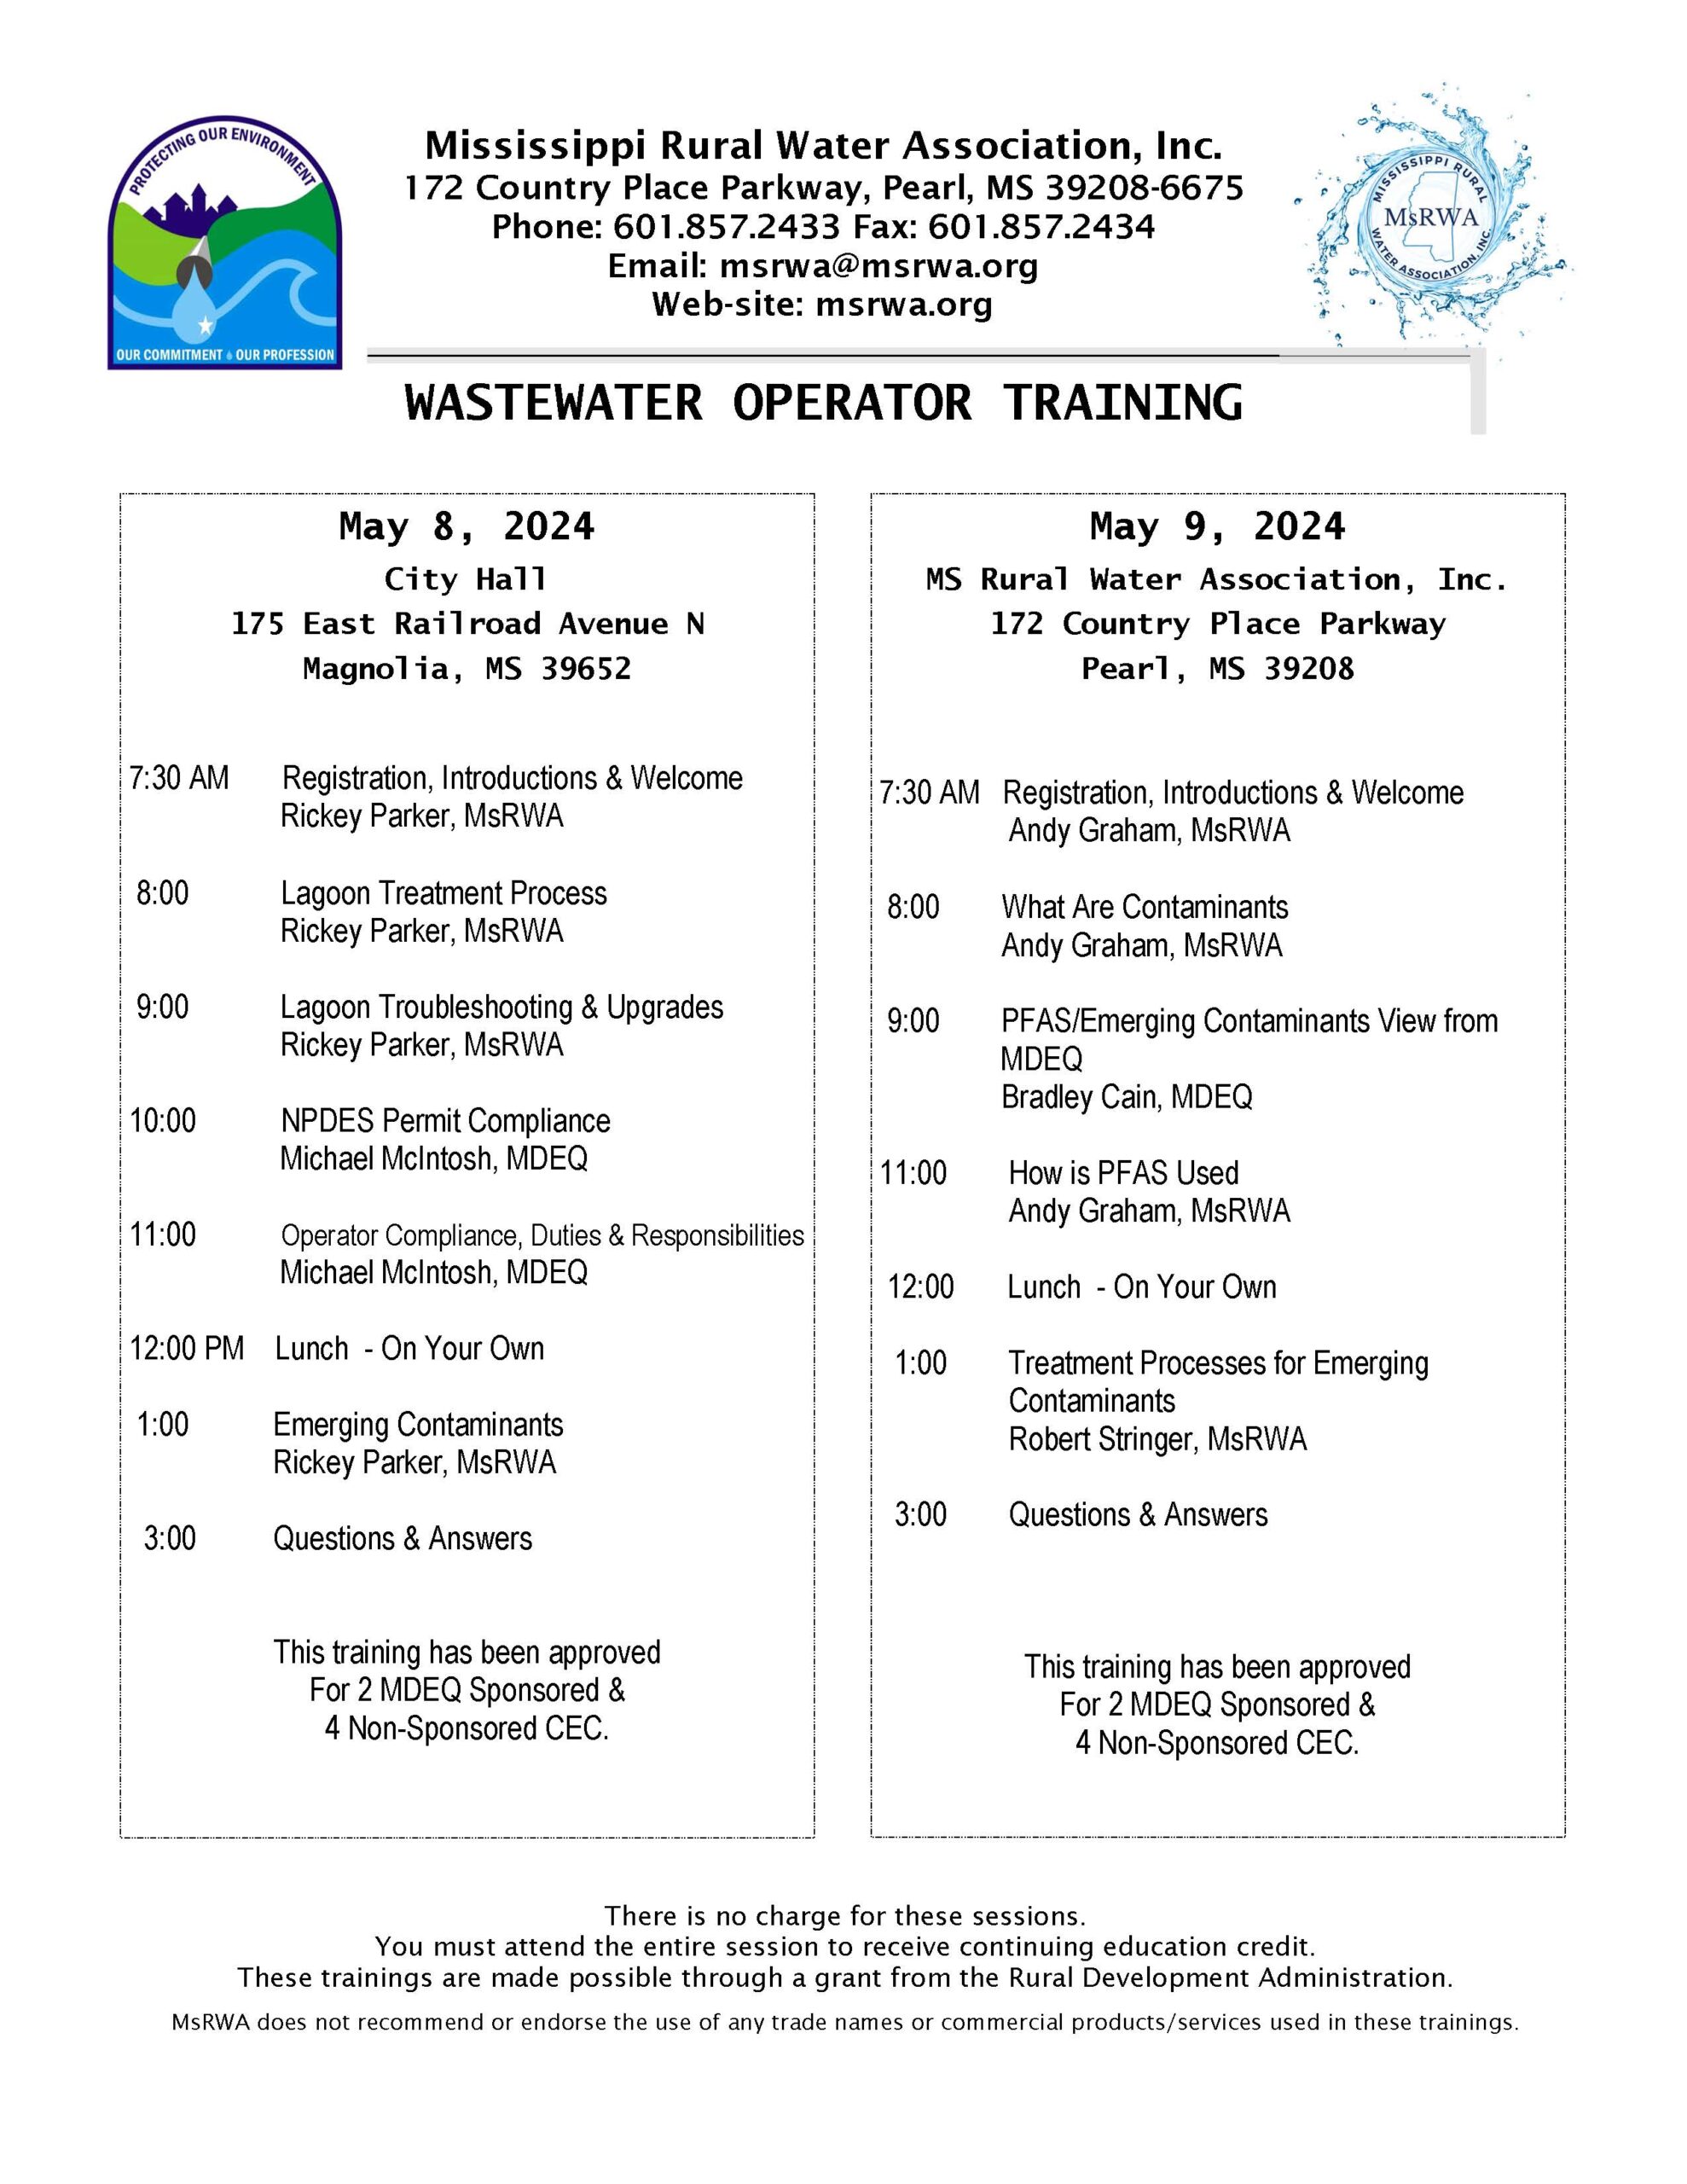 Wastewater Training - 2S/4NS - Magnolia @ City Hall